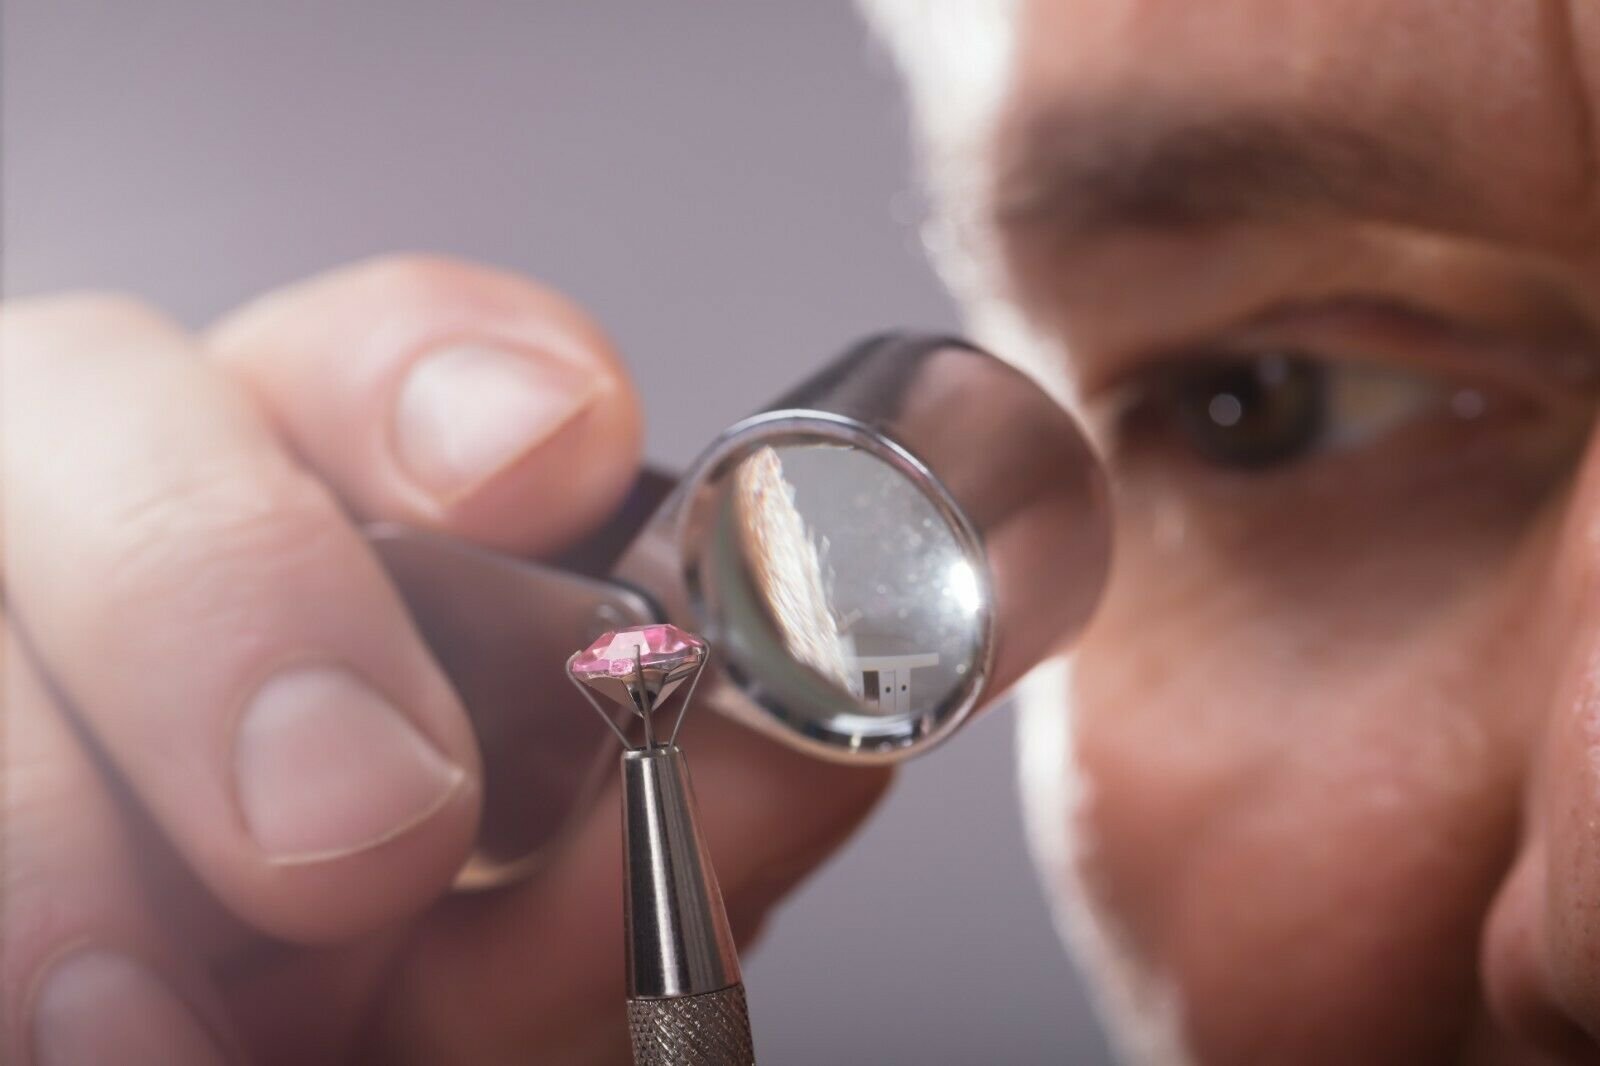 30X Jewelers Eye Loupe Magnifier Magnifying Glass Jewelry Diamond